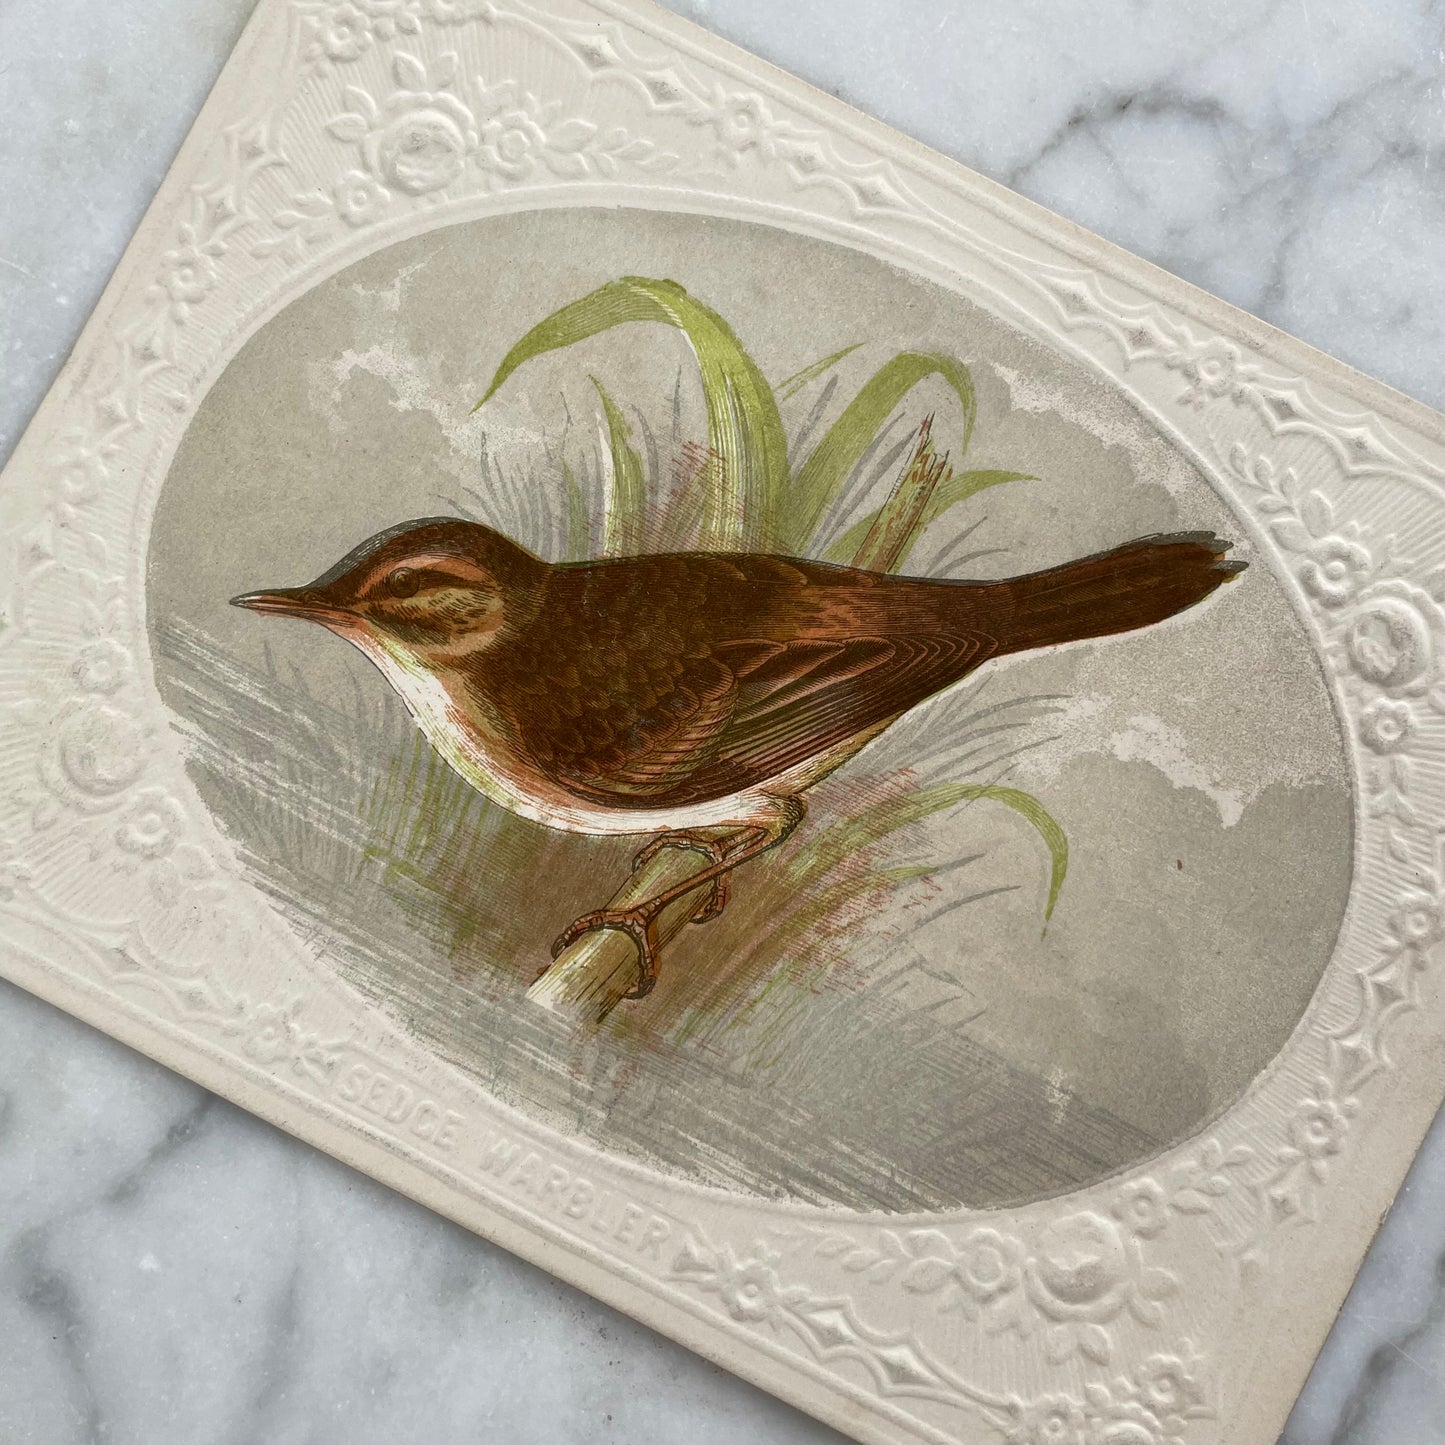 Victorian Bird Trade Card | Sedge Warbler